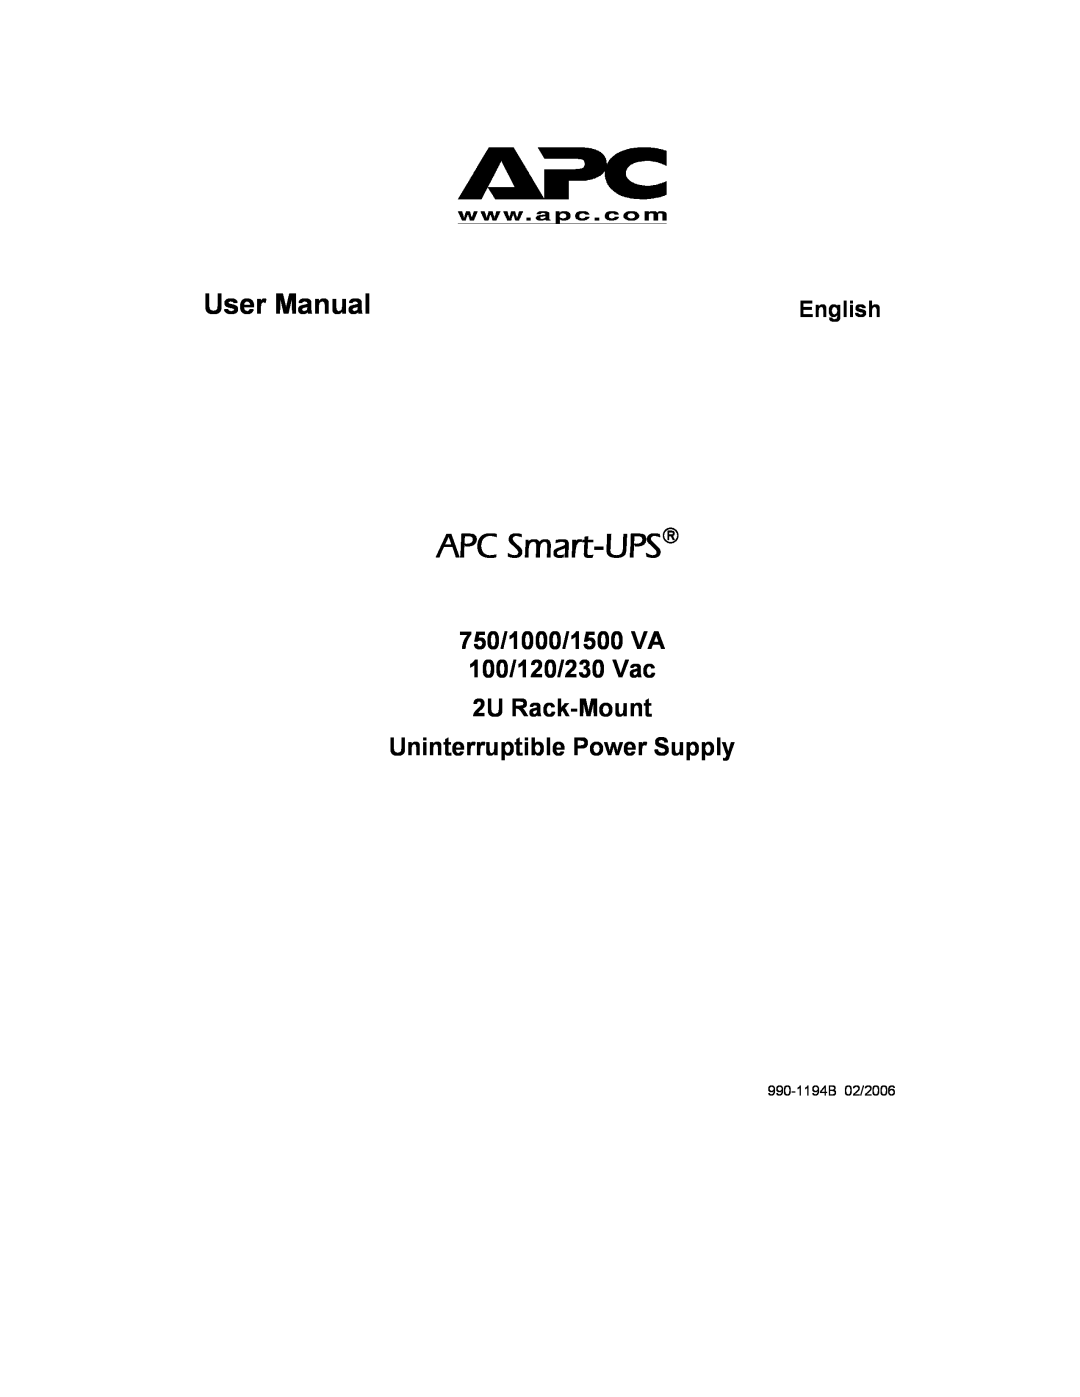 American Power Conversion 750 VA user manual APC Smart-UPS, User Manual, 750/1000/1500 VA 100/120/230 Vac 2U Rack-Mount 